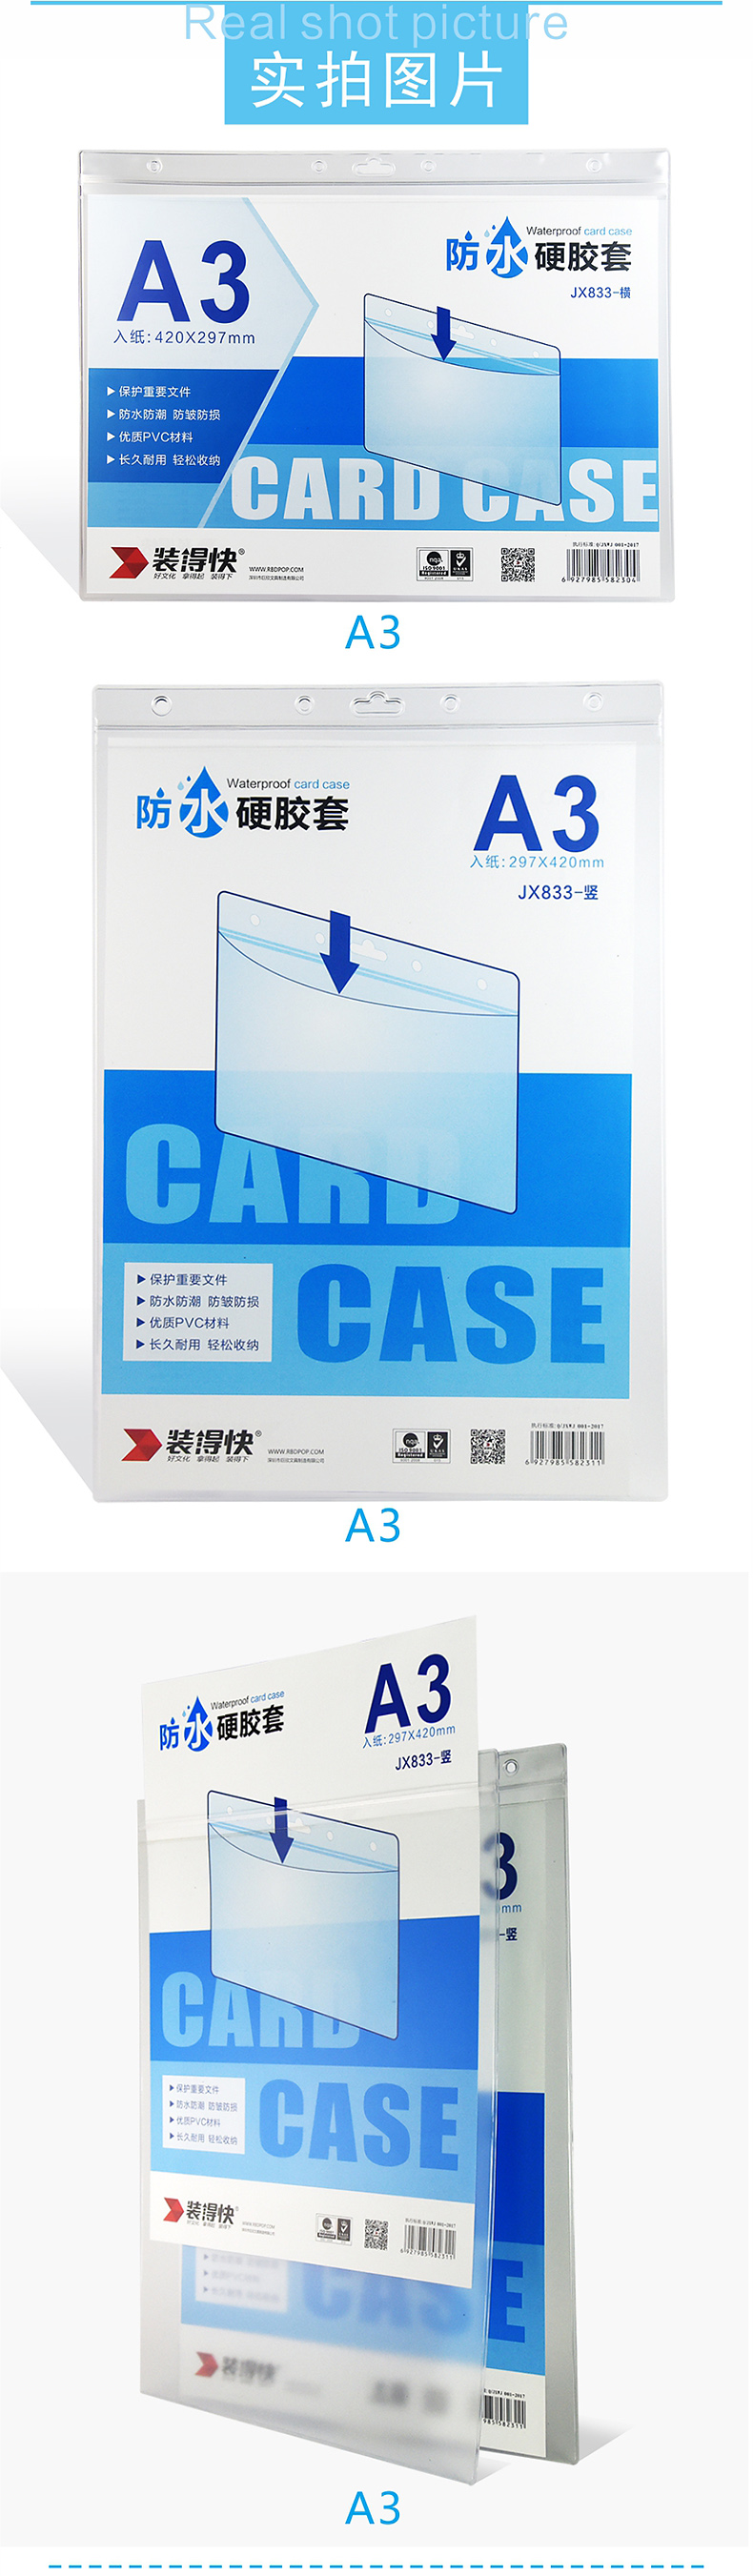 A5 plastic document case